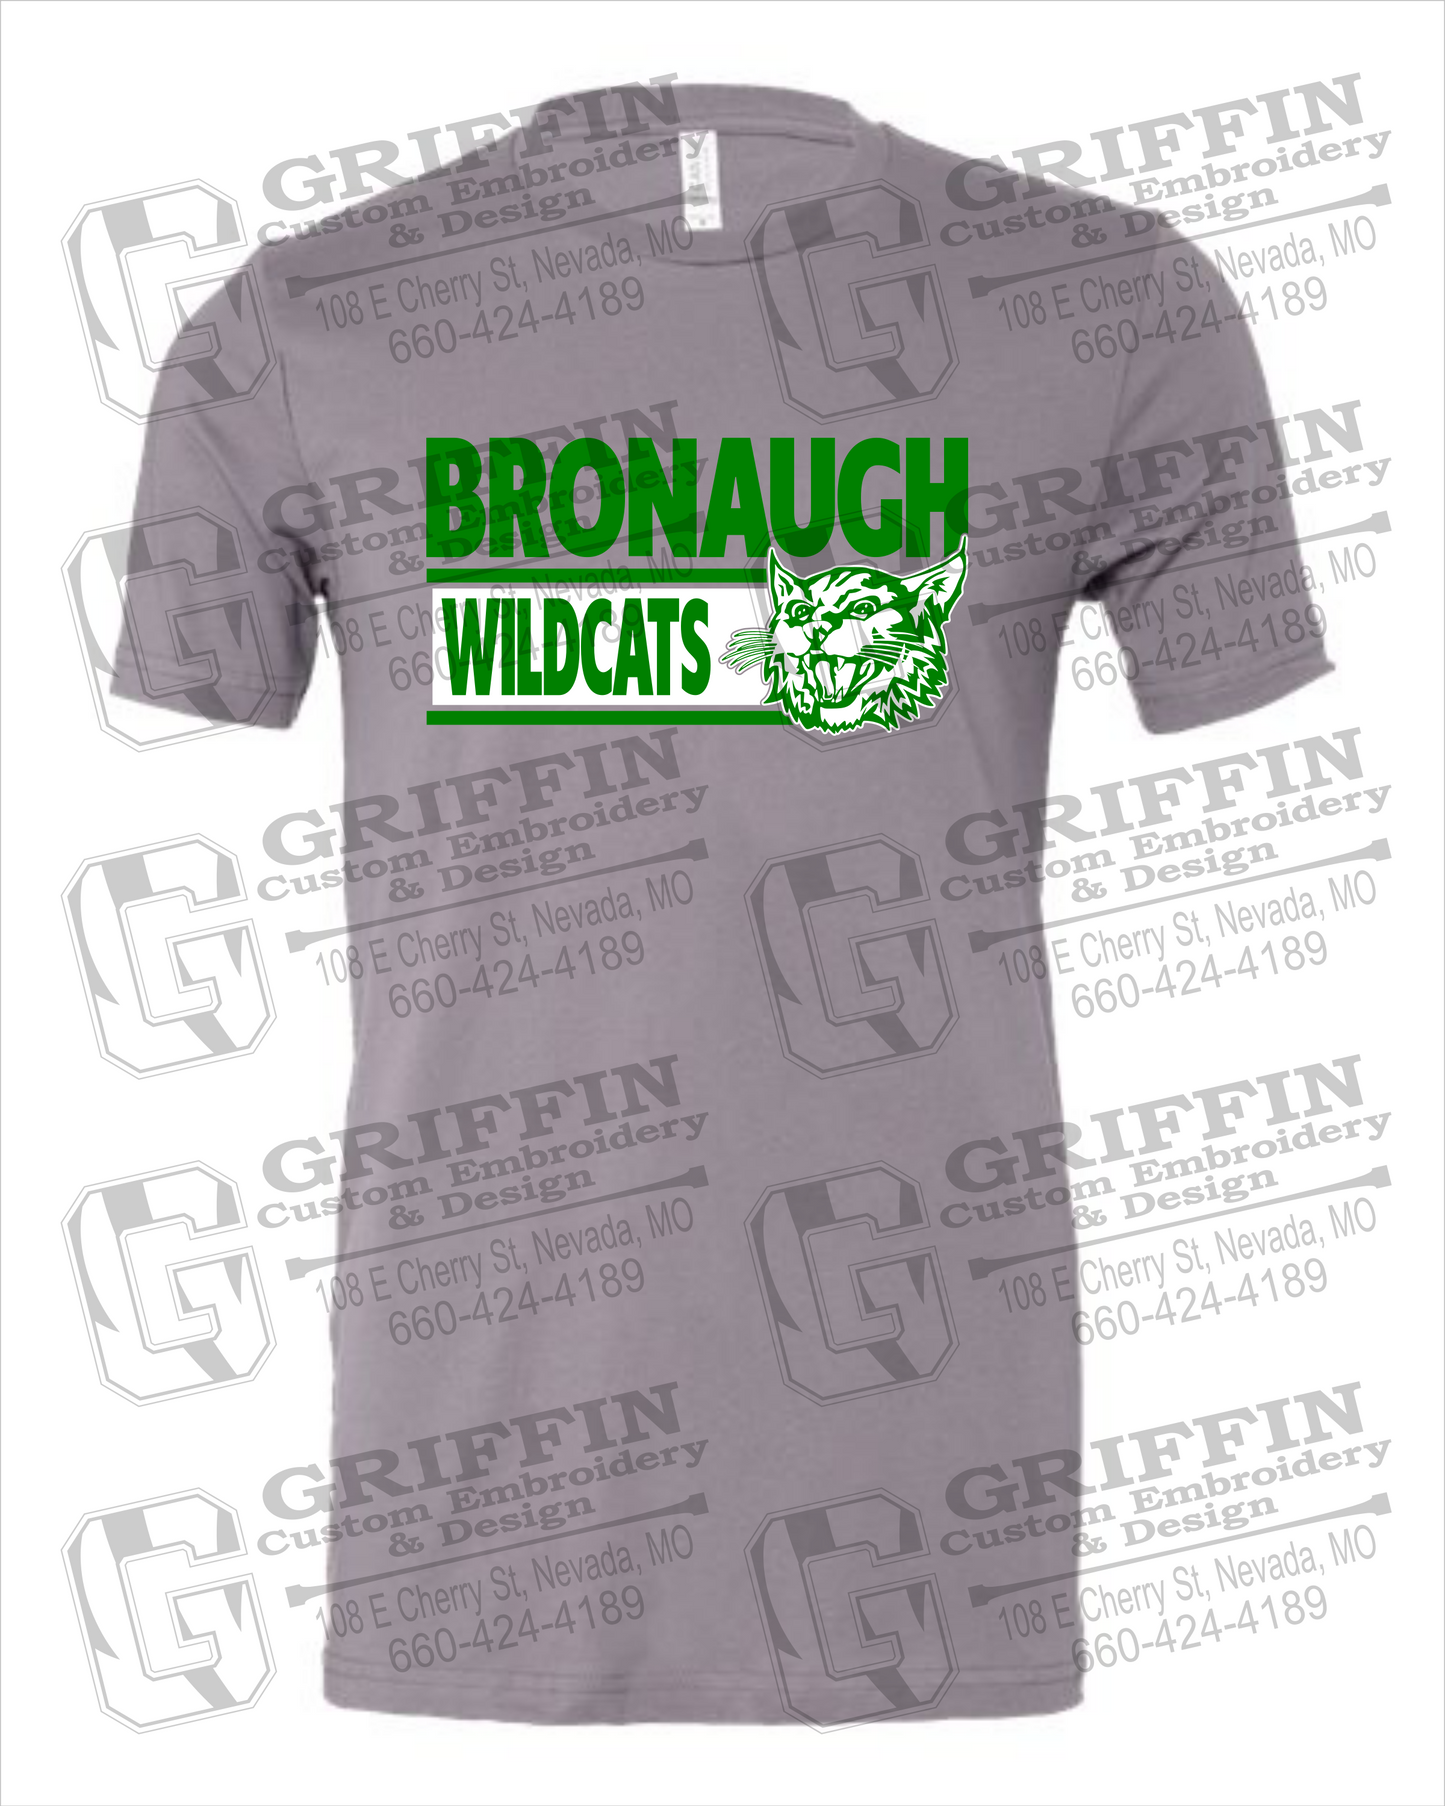 Bronaugh Wildcats 24-B 100% Cotton Short Sleeve T-Shirt